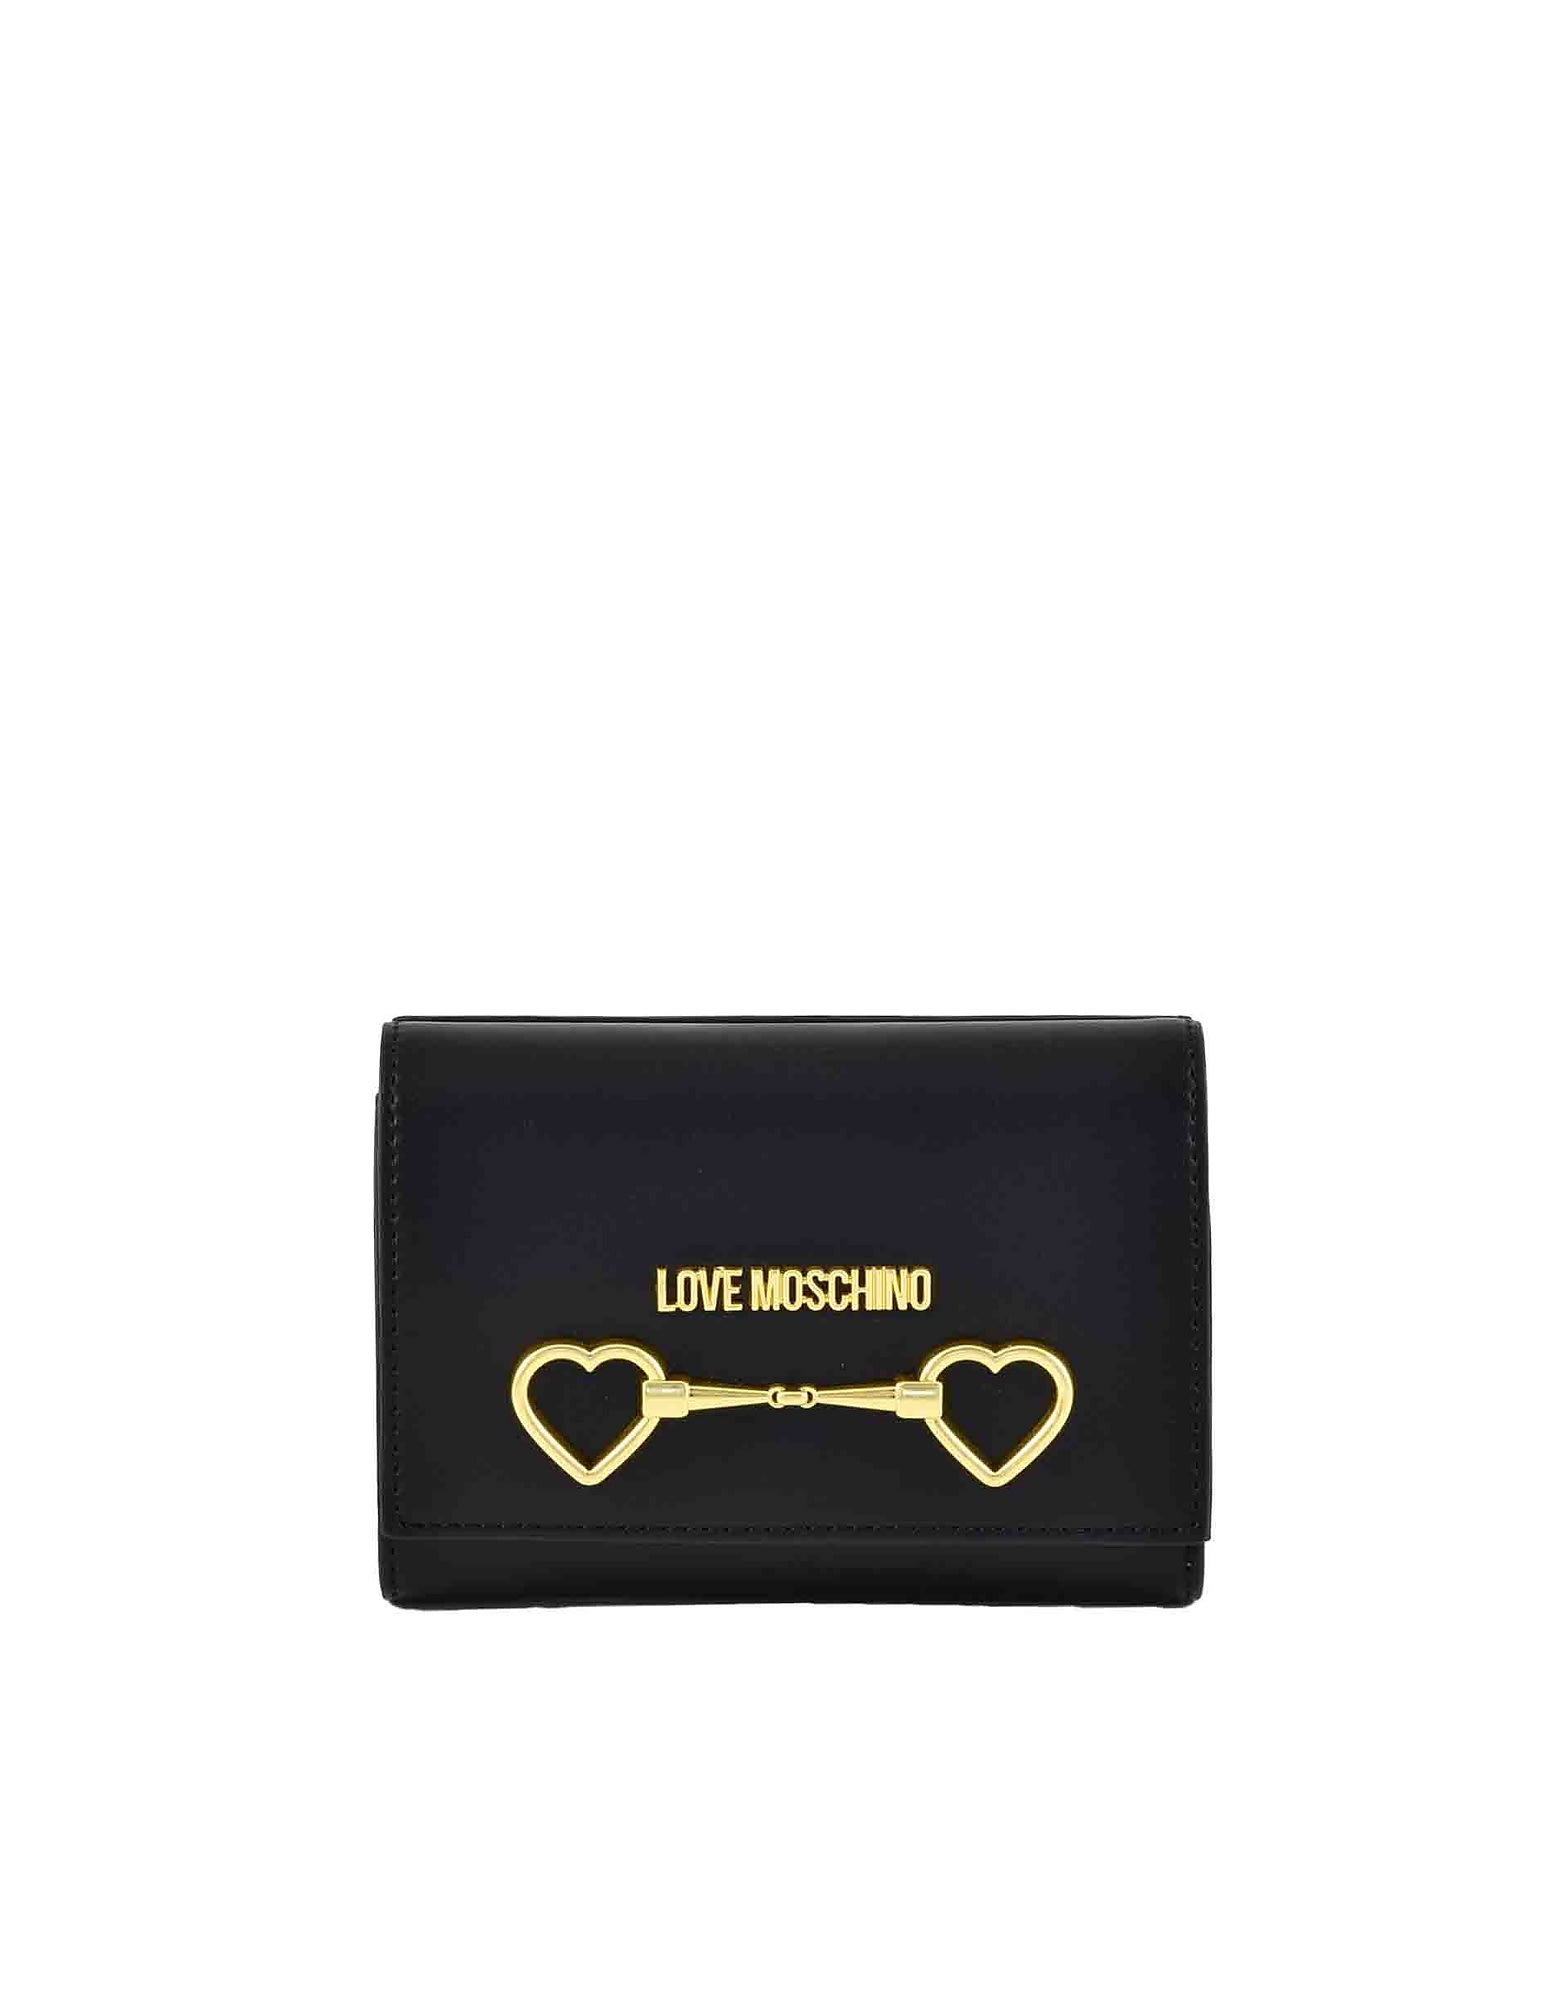 Love Moschino Womens Black Wallet